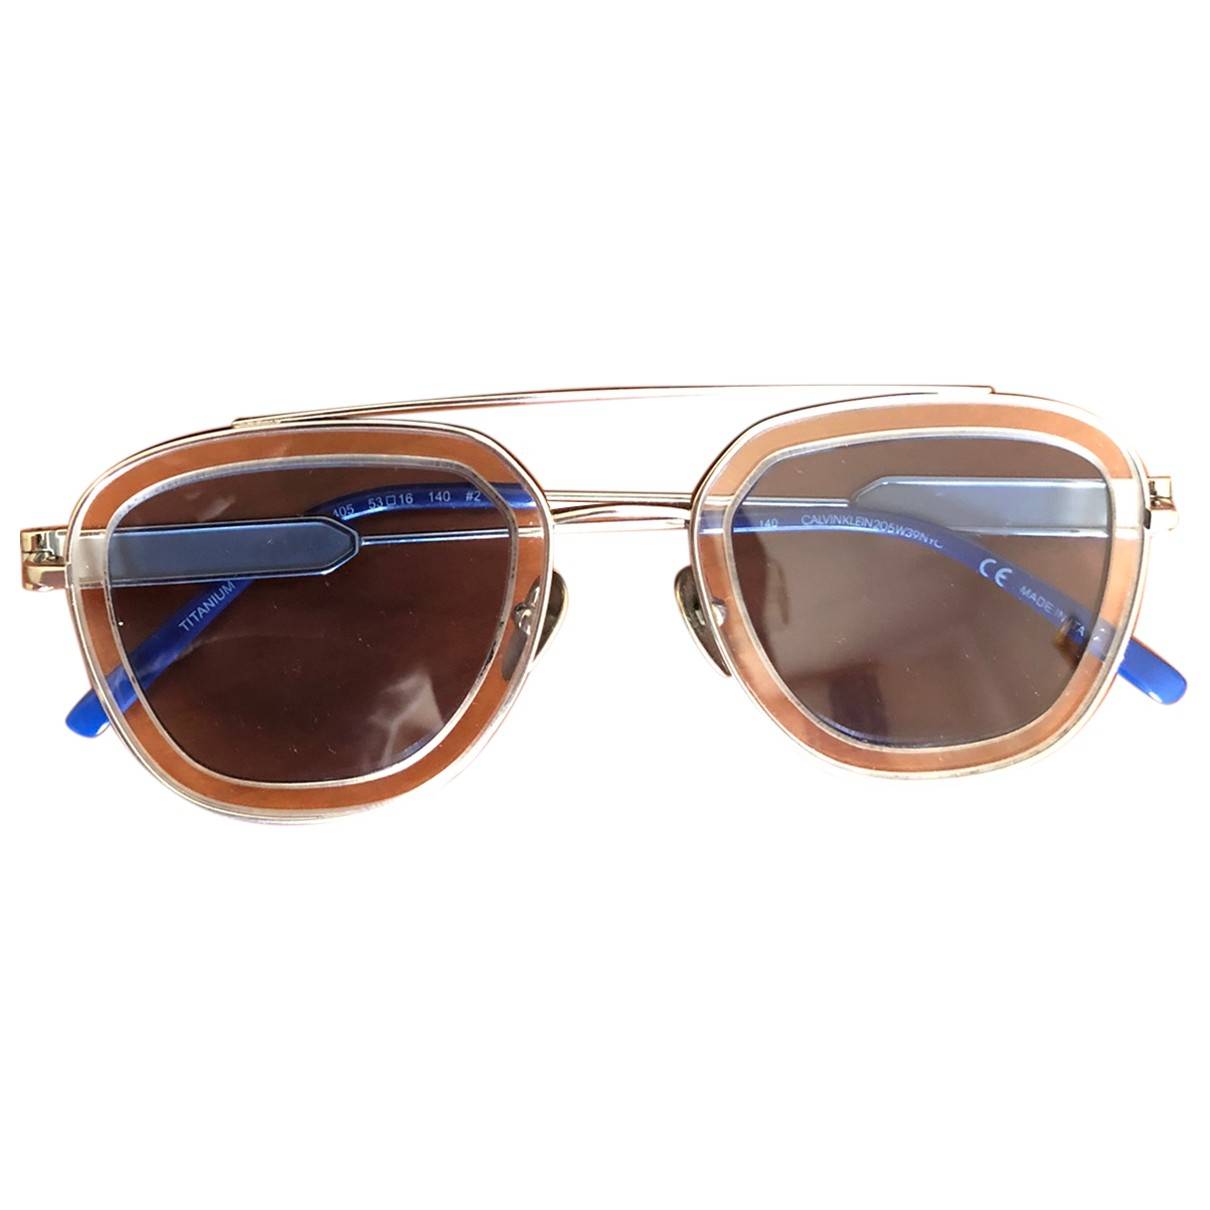 Sunglasses Calvin Klein 205W39NYC Blue in Metal - 23431731